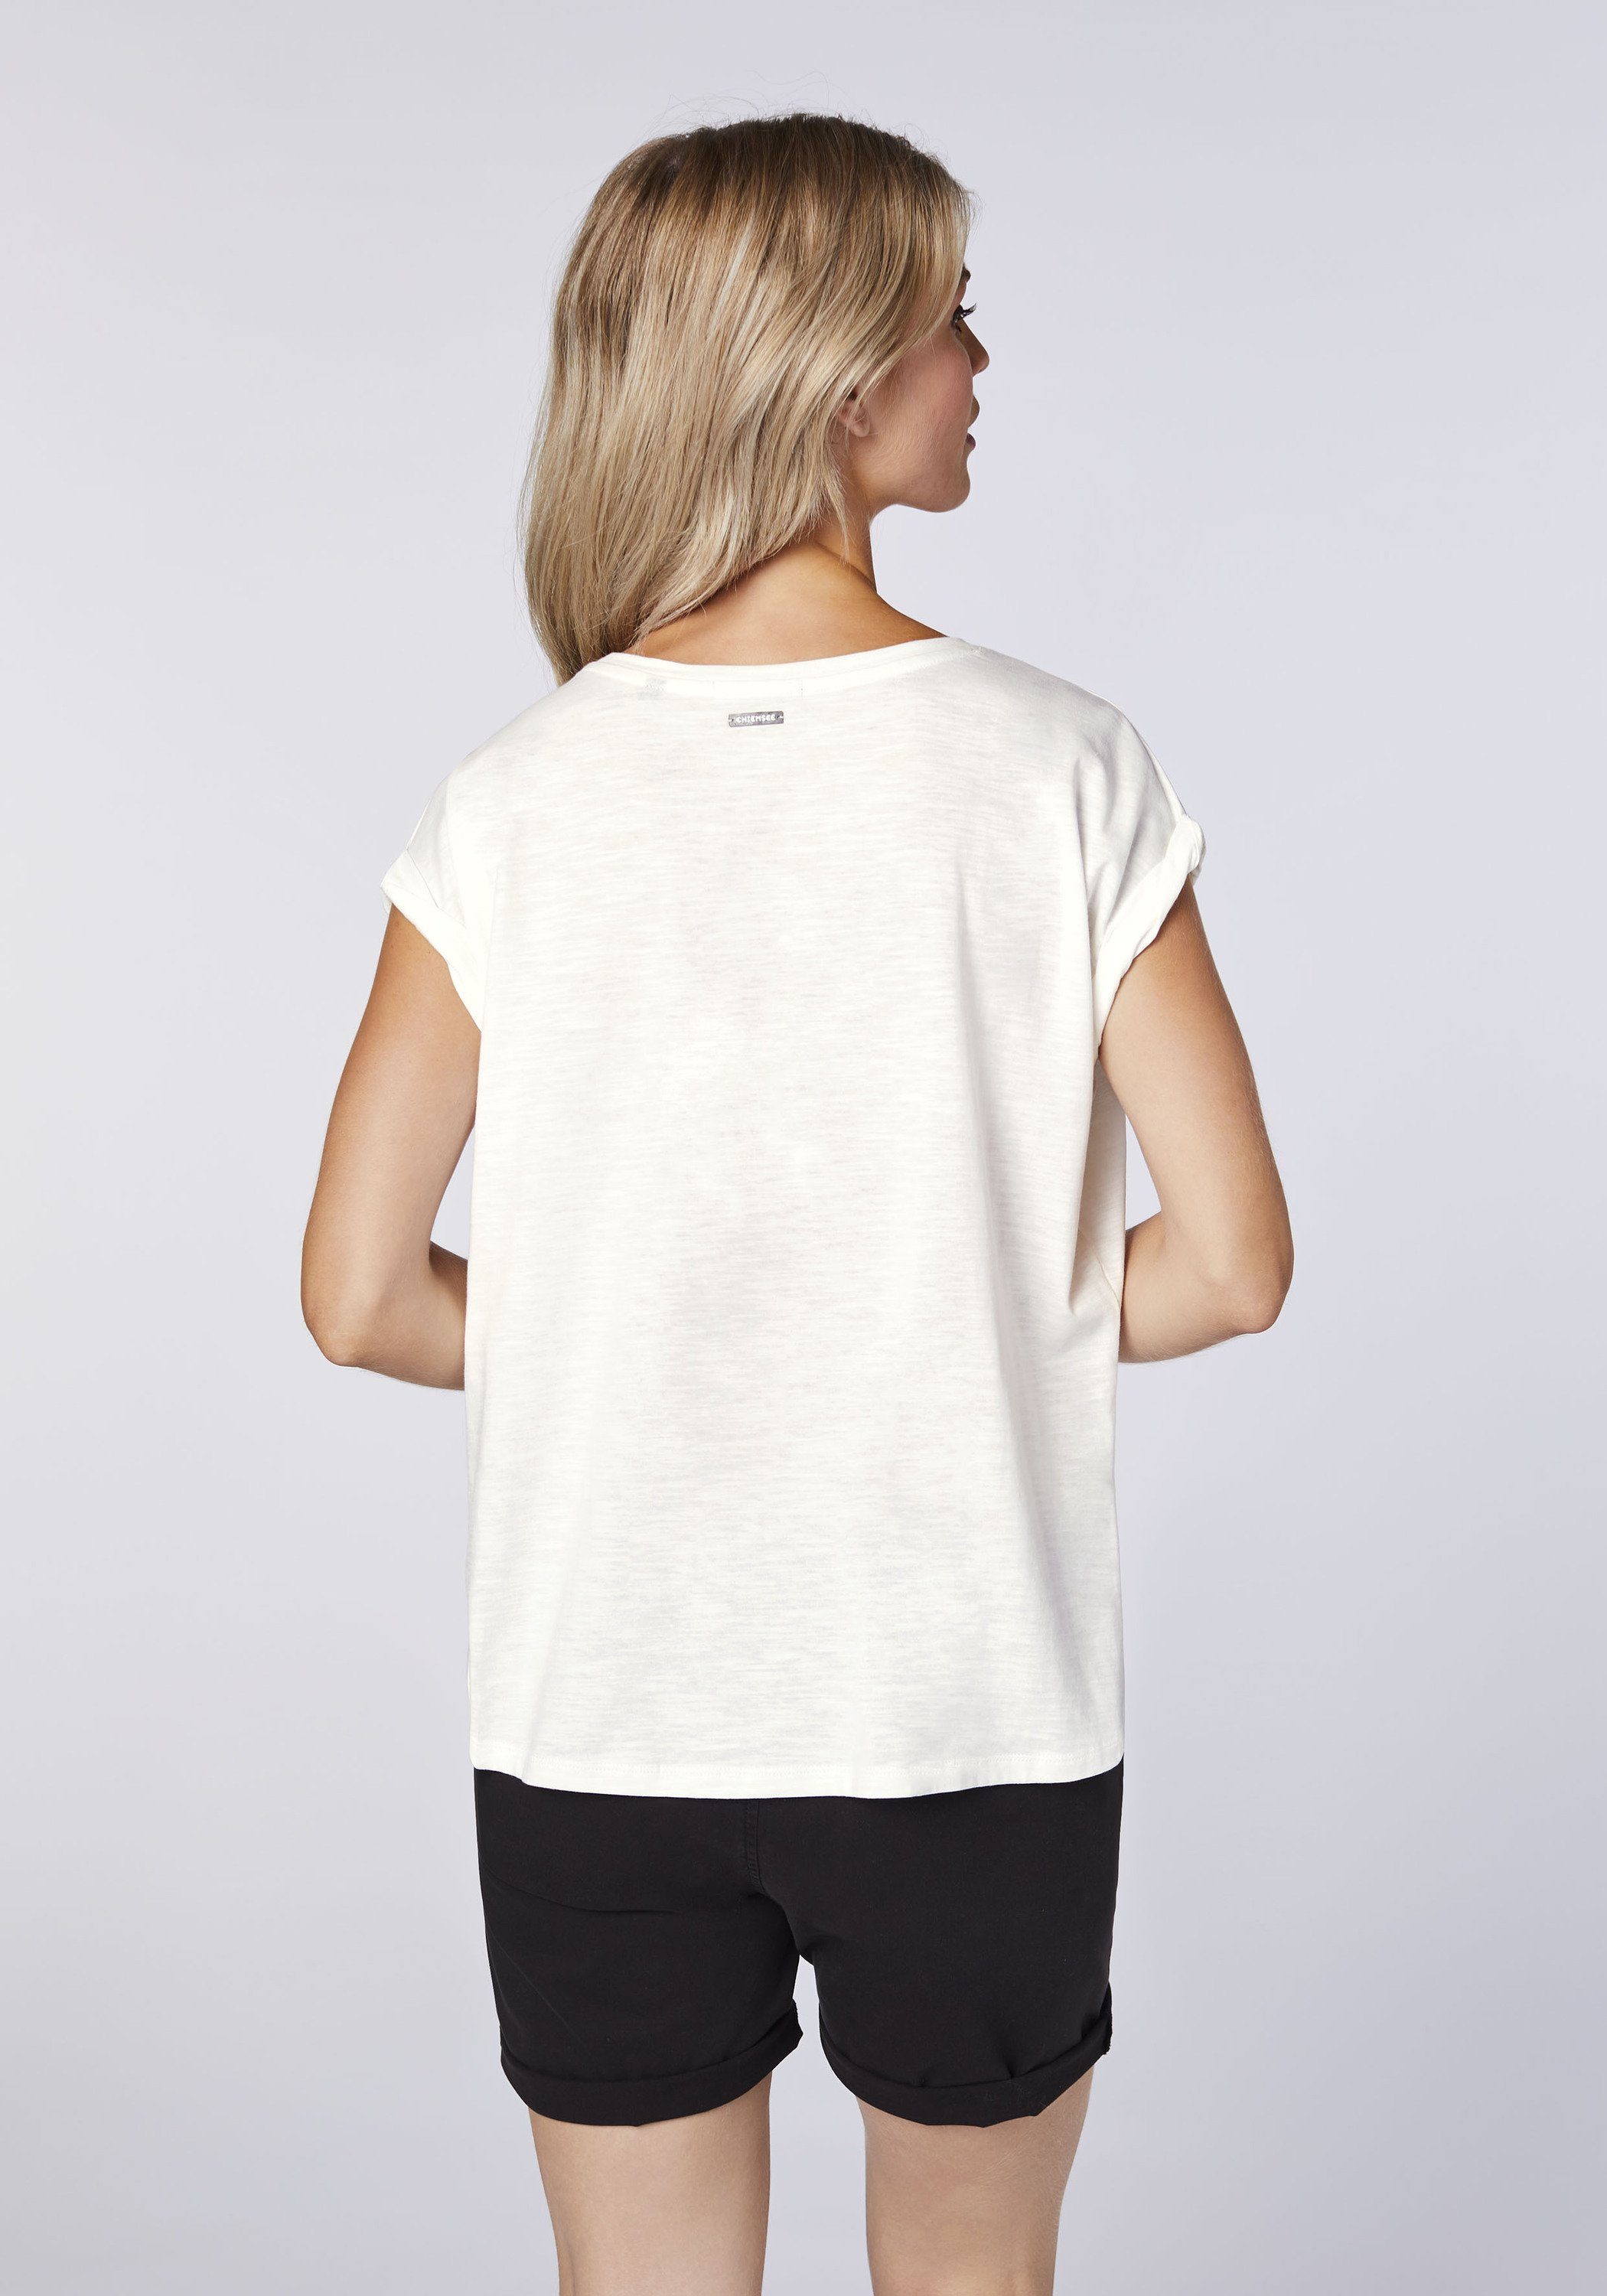 mit 1 Chiemsee White/Med Blue Print-Shirt Frontprint mehrfarbigem T-Shirt